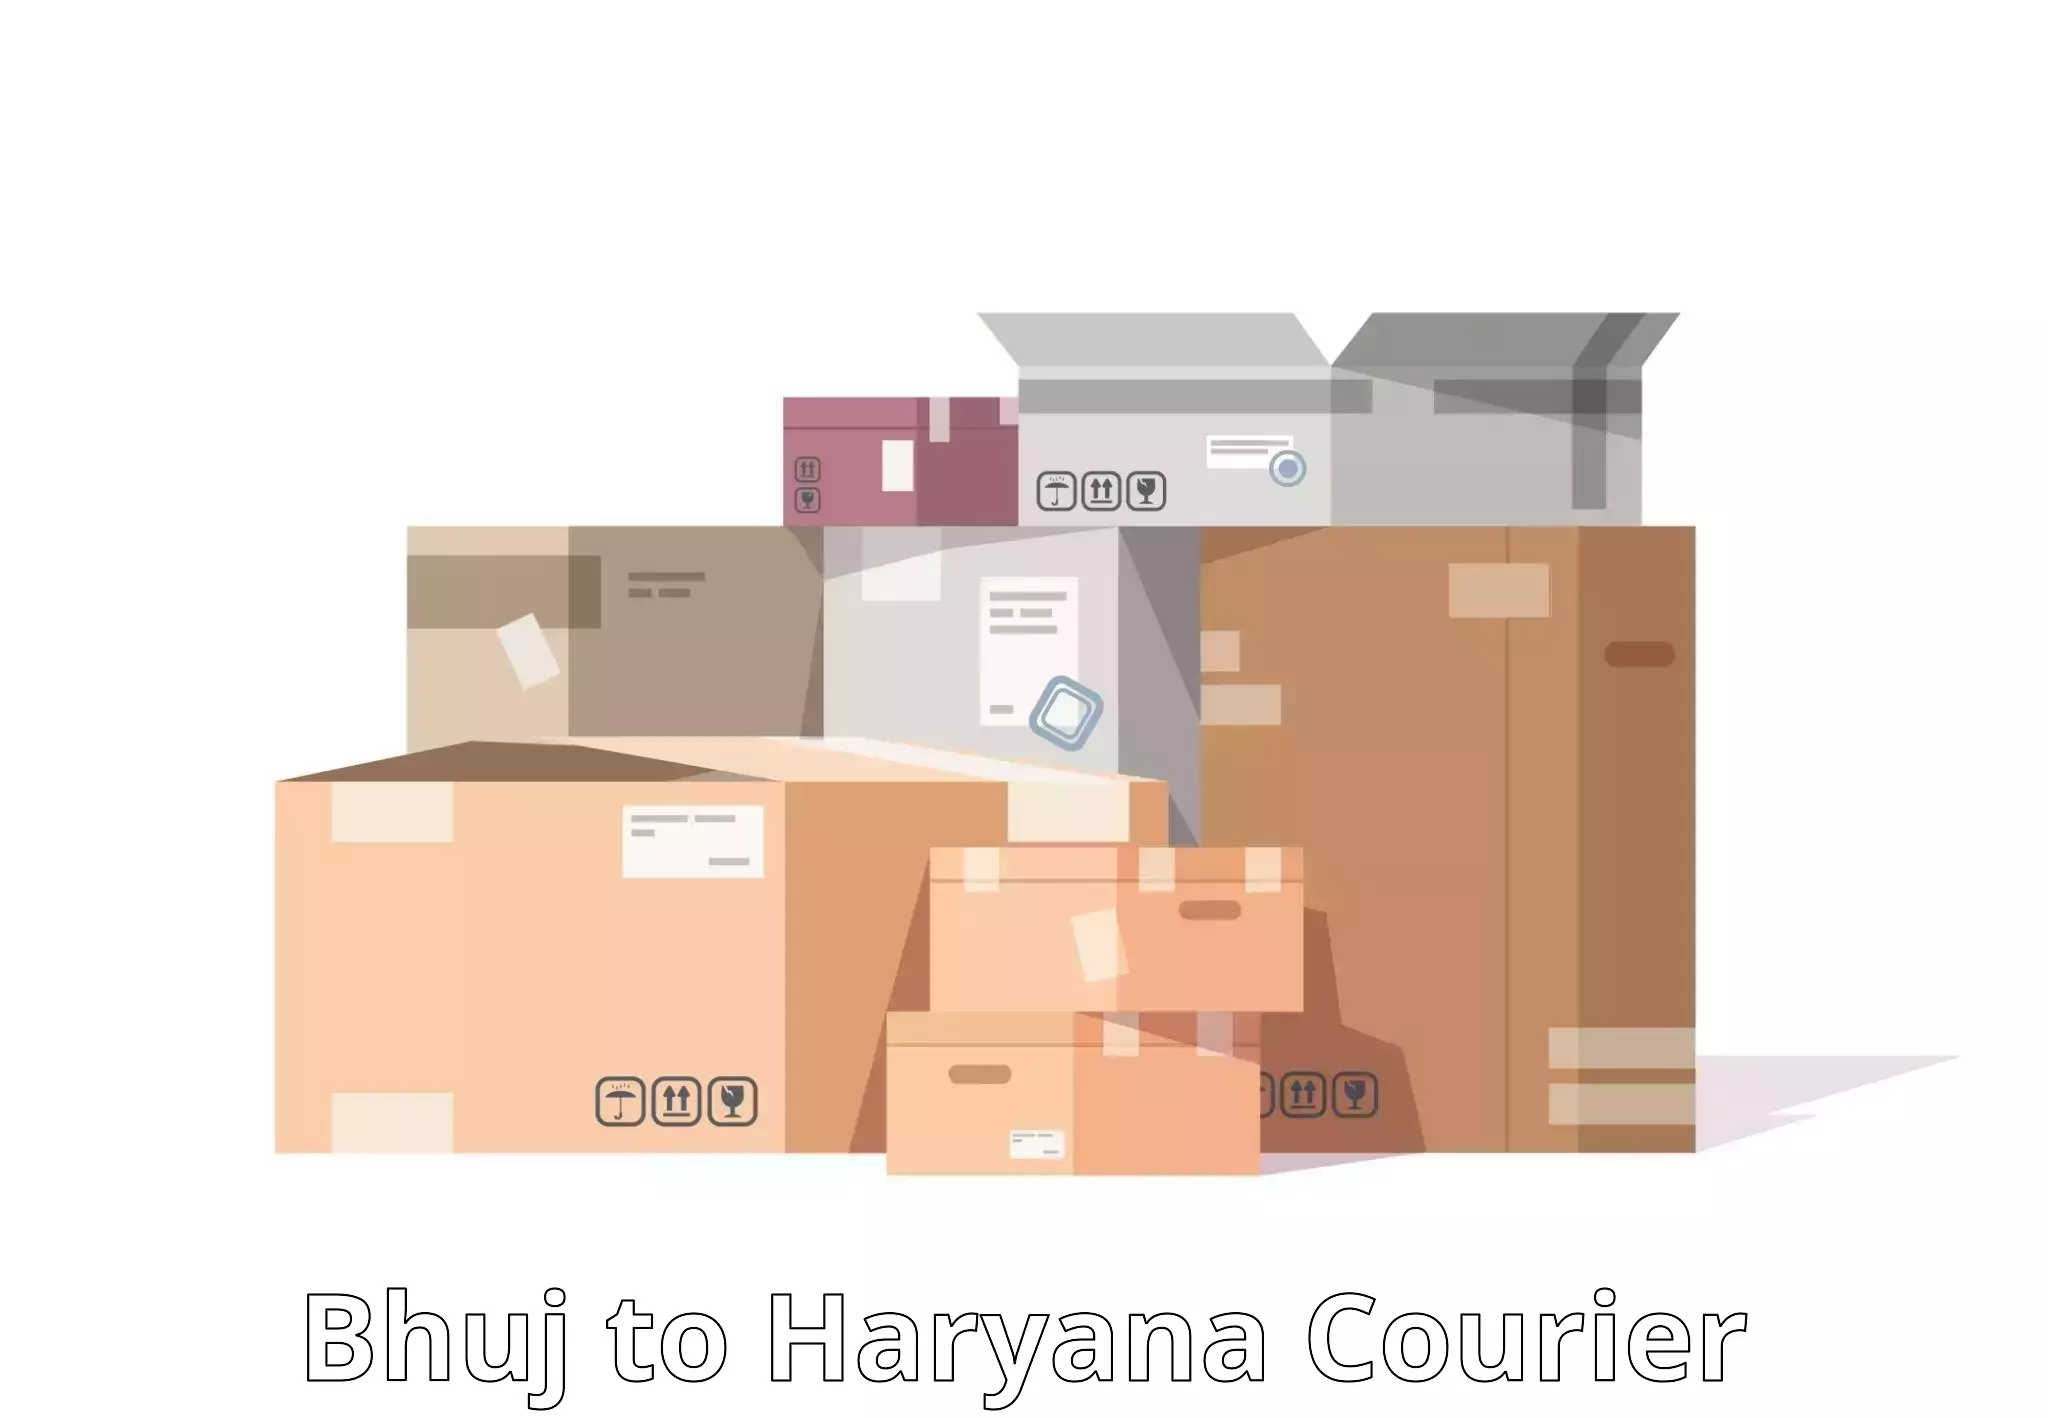 Package consolidation Bhuj to Panchkula